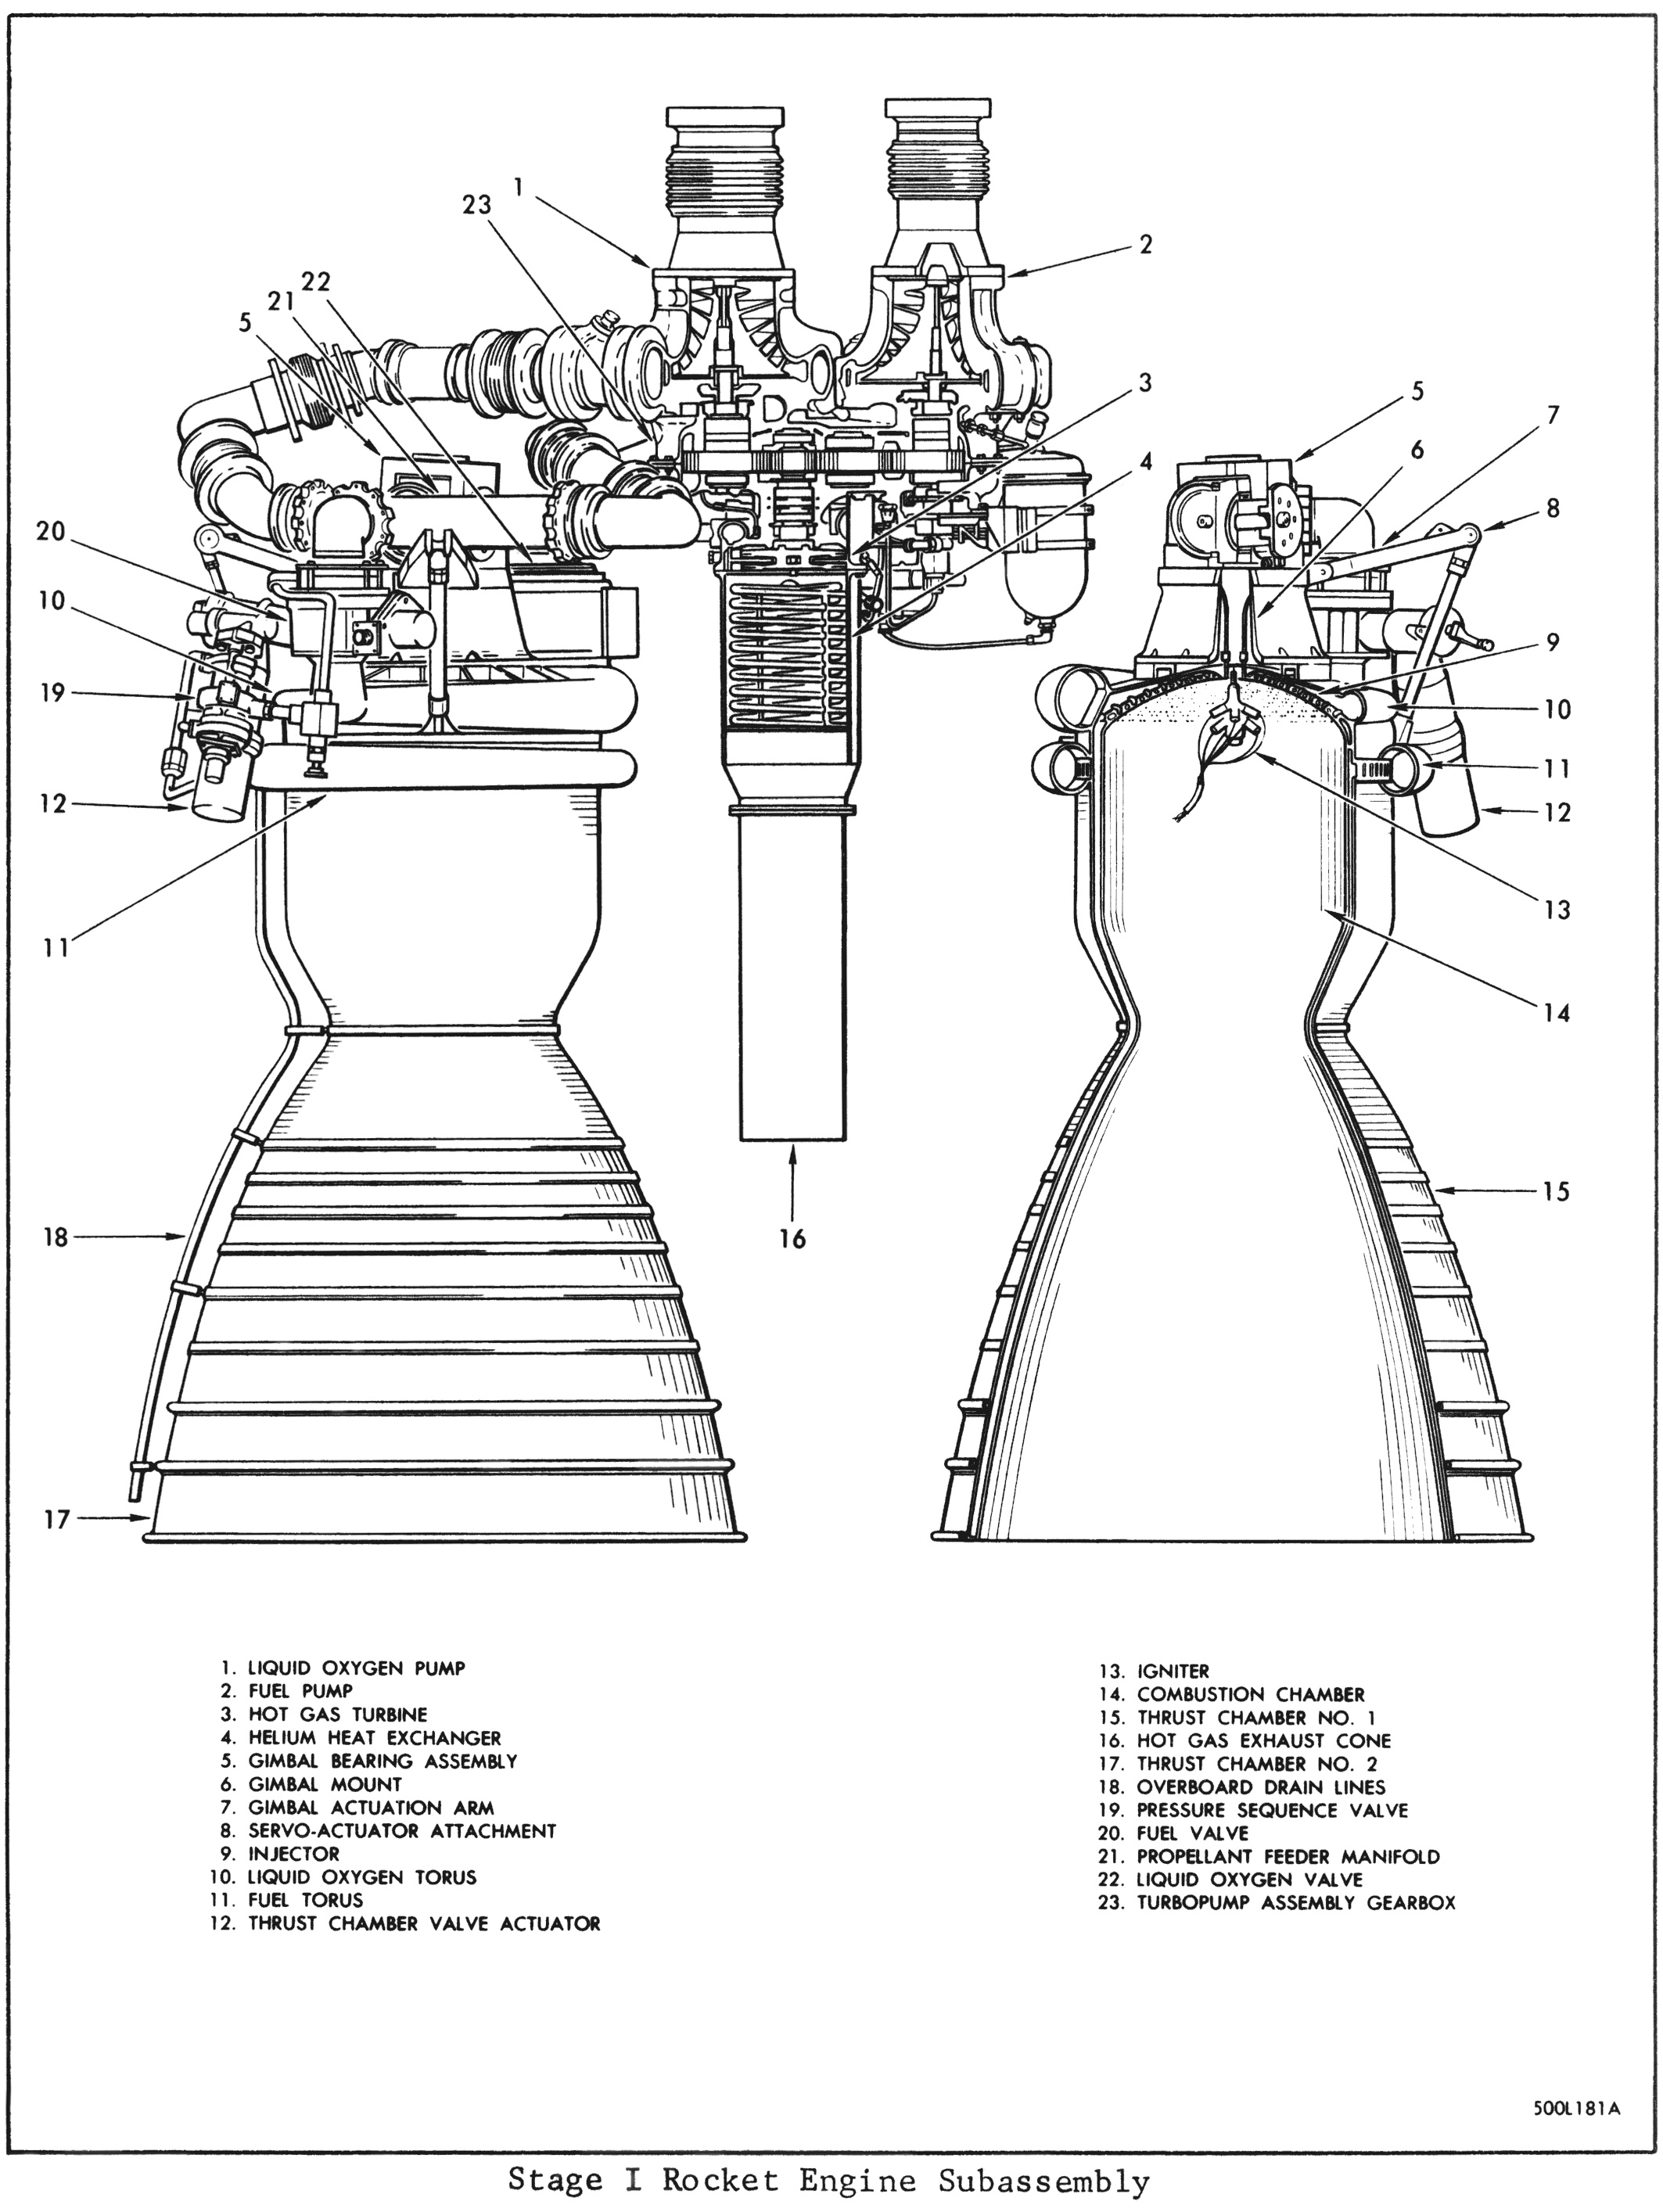 titan-i-stage-1-engine-subassembly.jpg